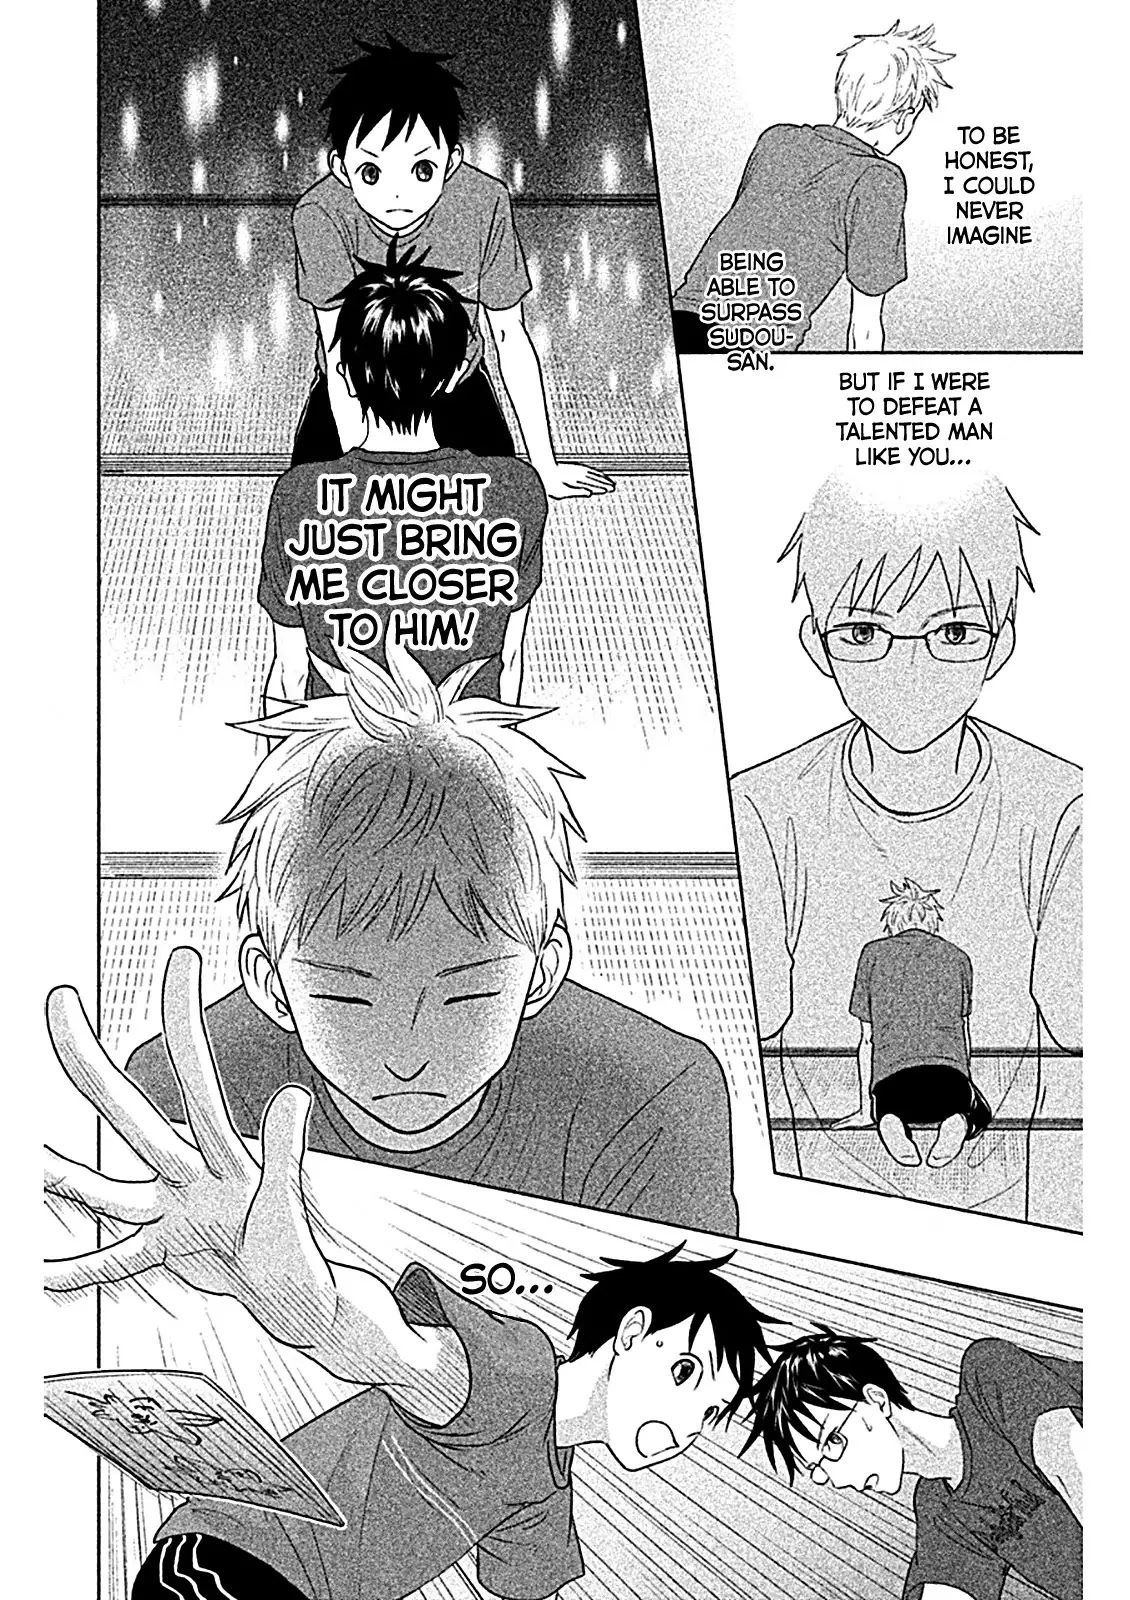 Chihayafuru: Middle School Arc - 10 page 9